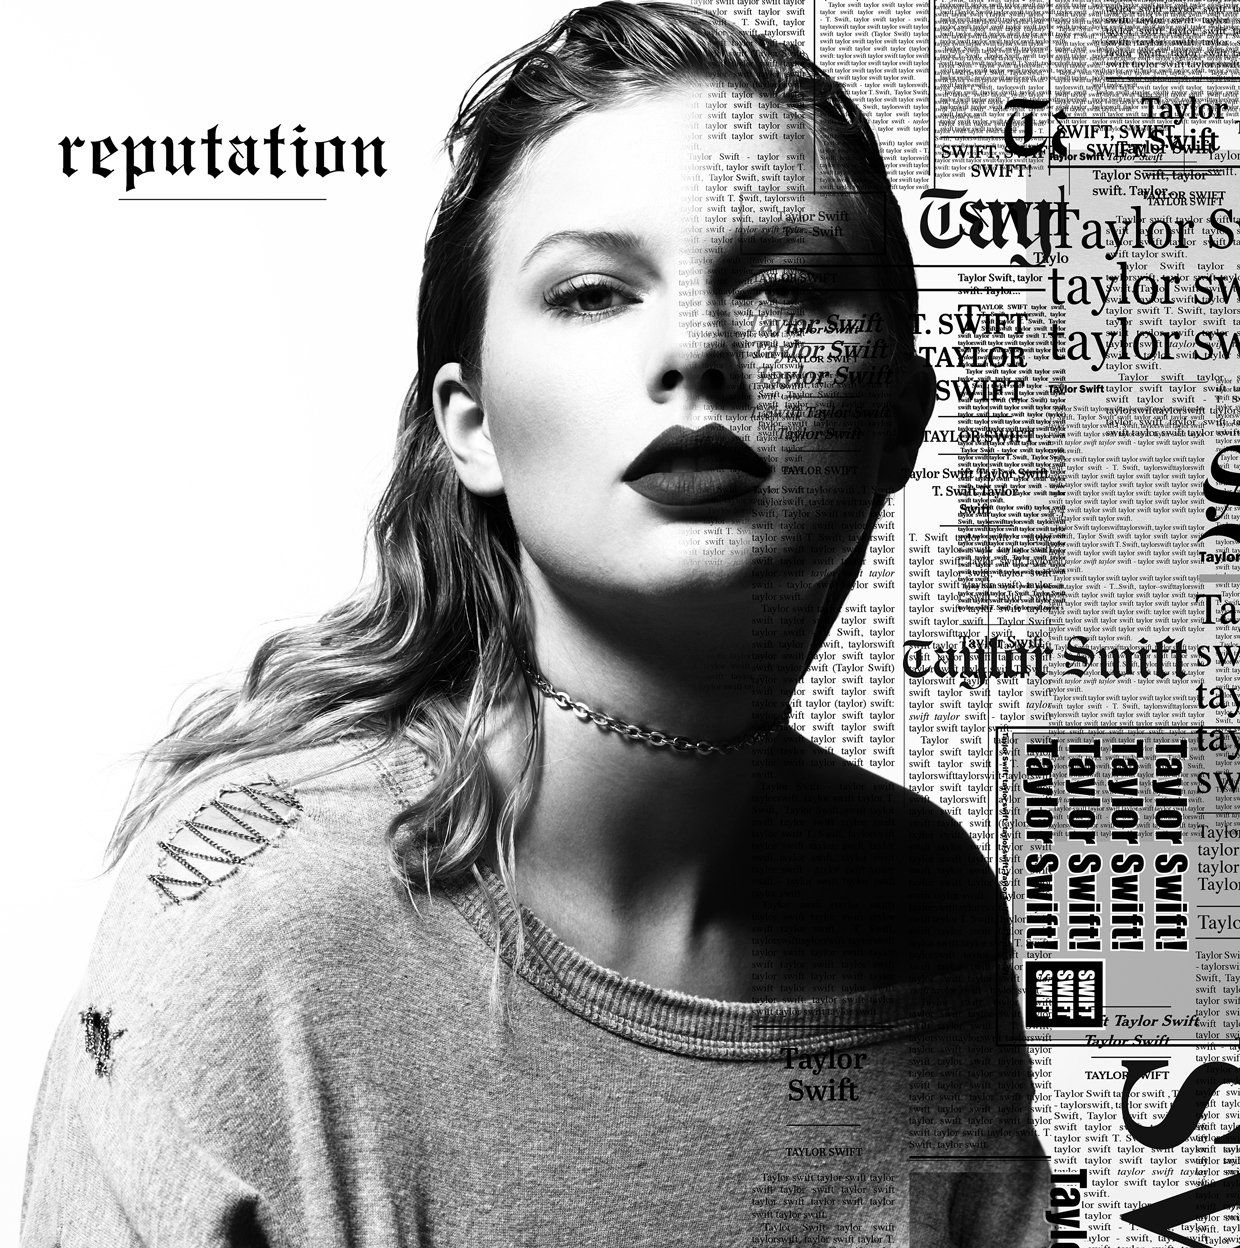 Imagem do álbum reputation do(a) artista Taylor Swift